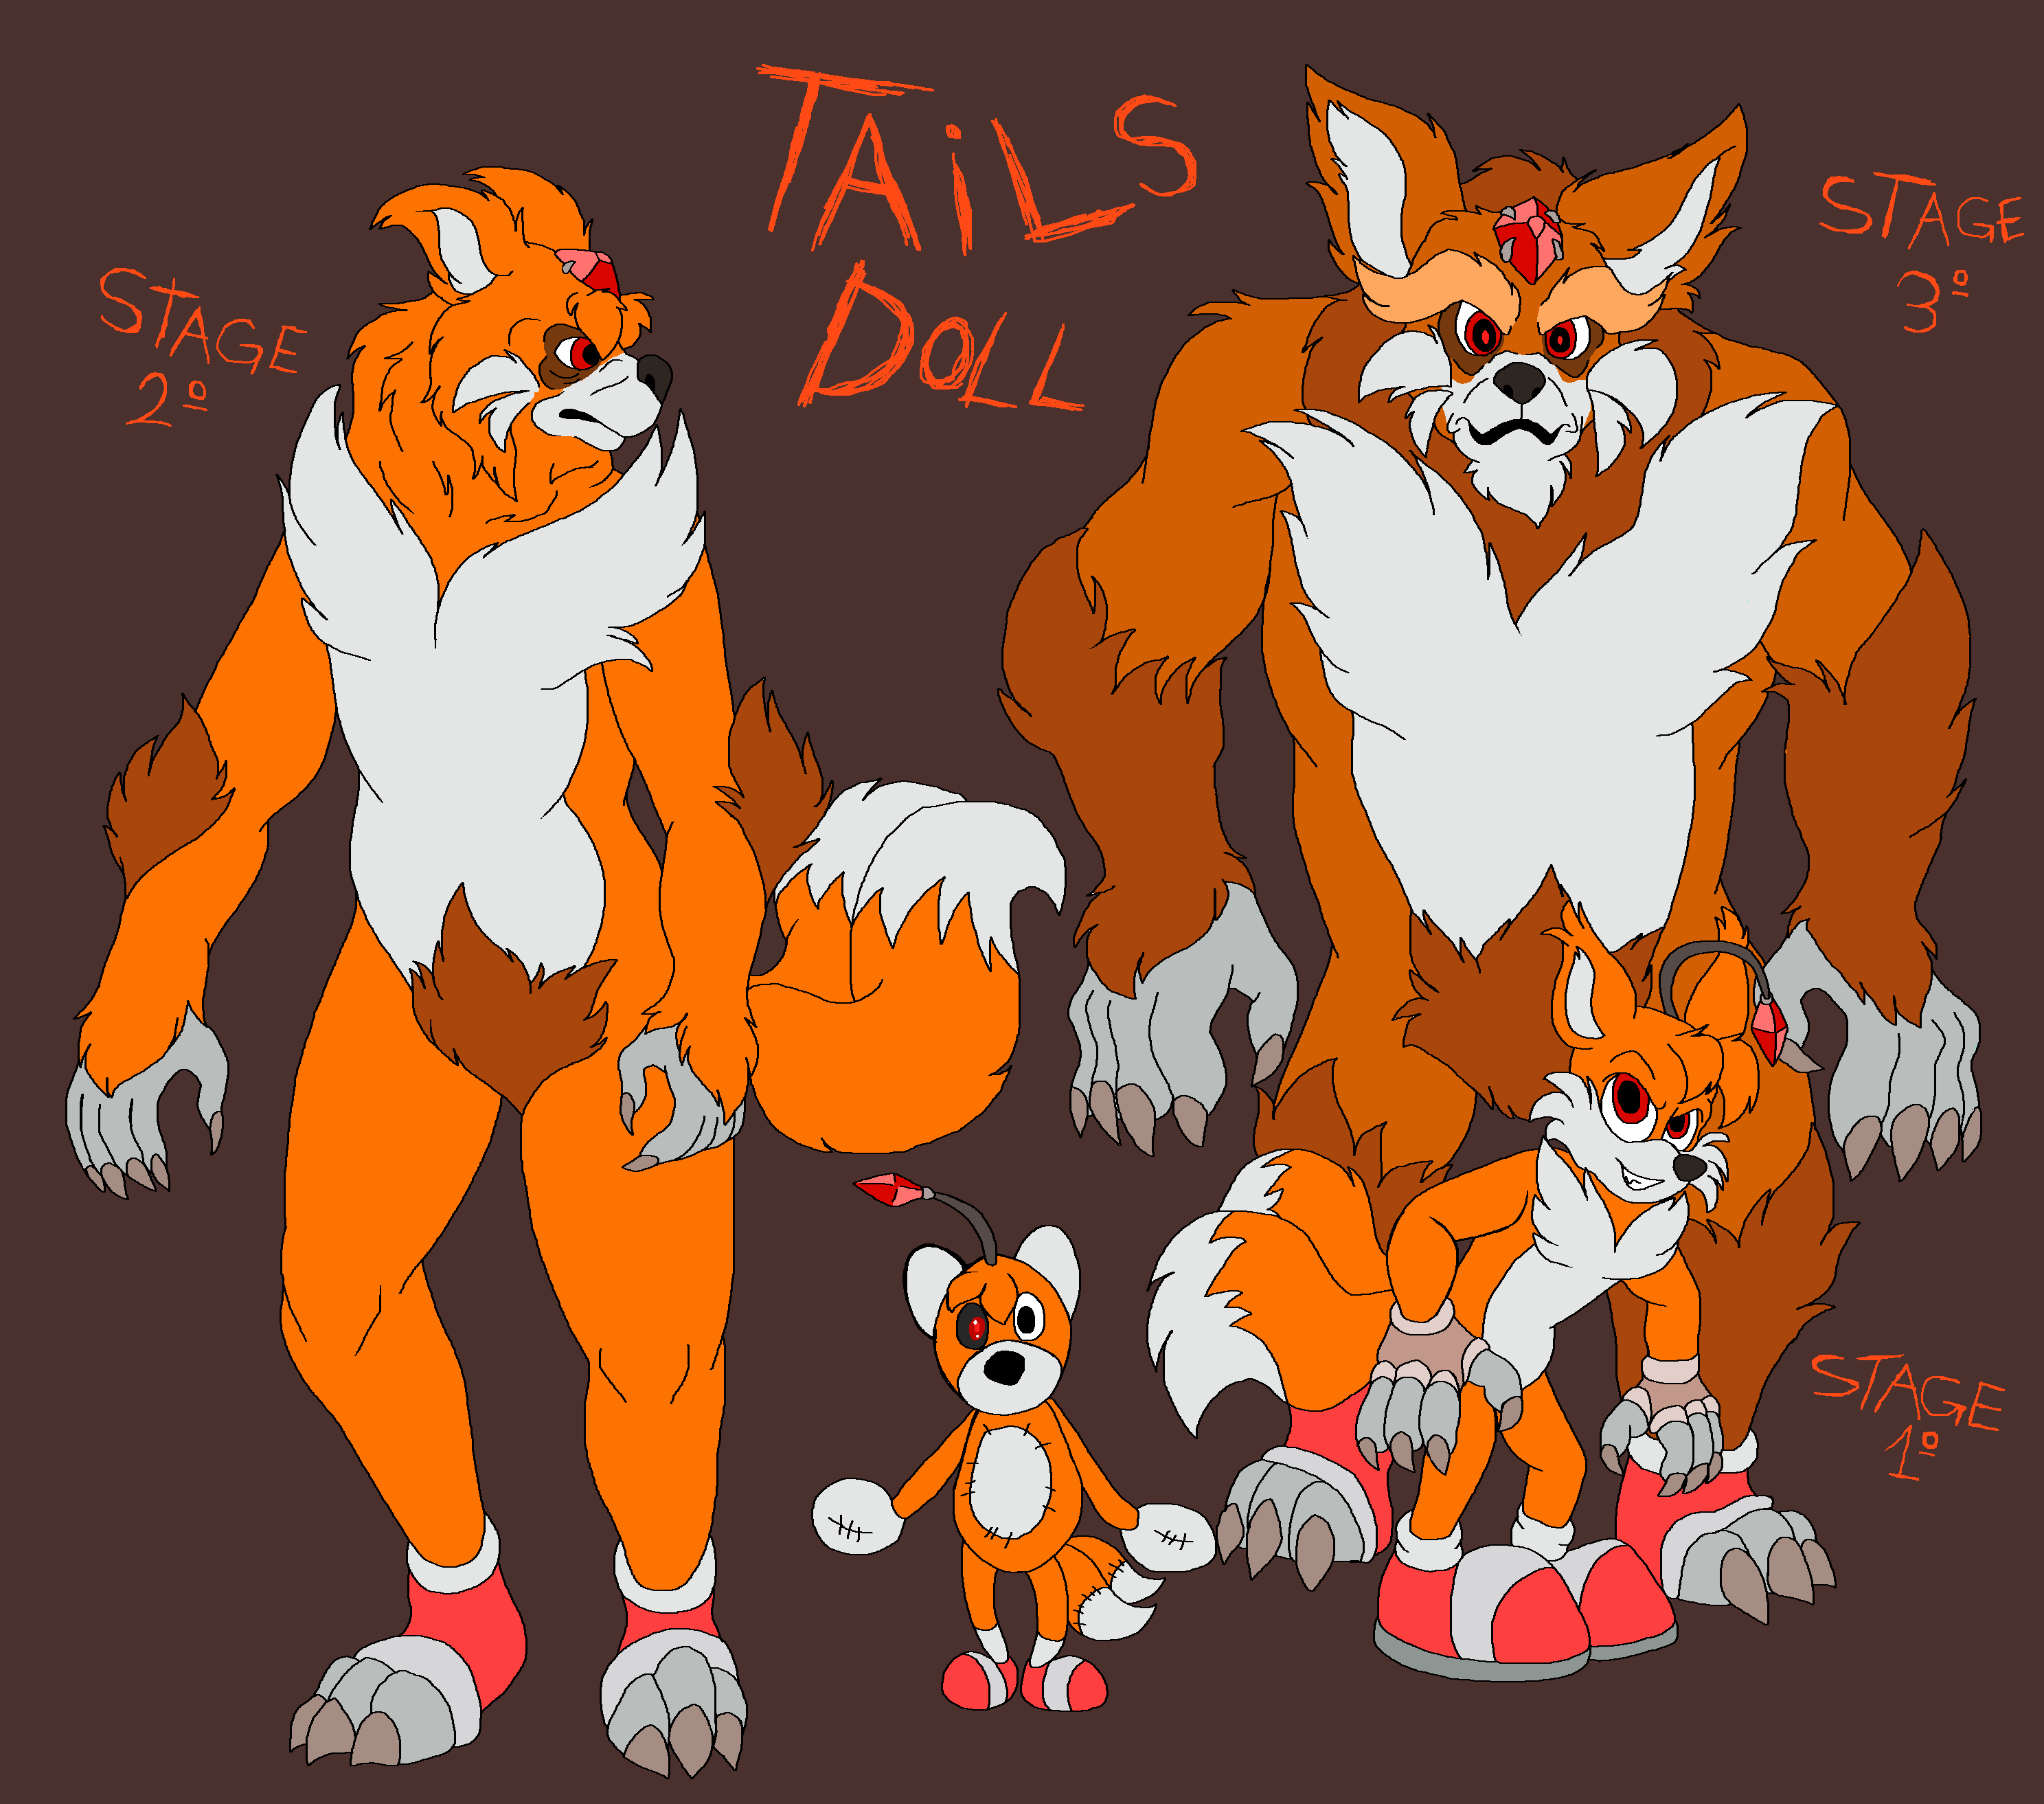 Tails Doll by TailsdoII on DeviantArt